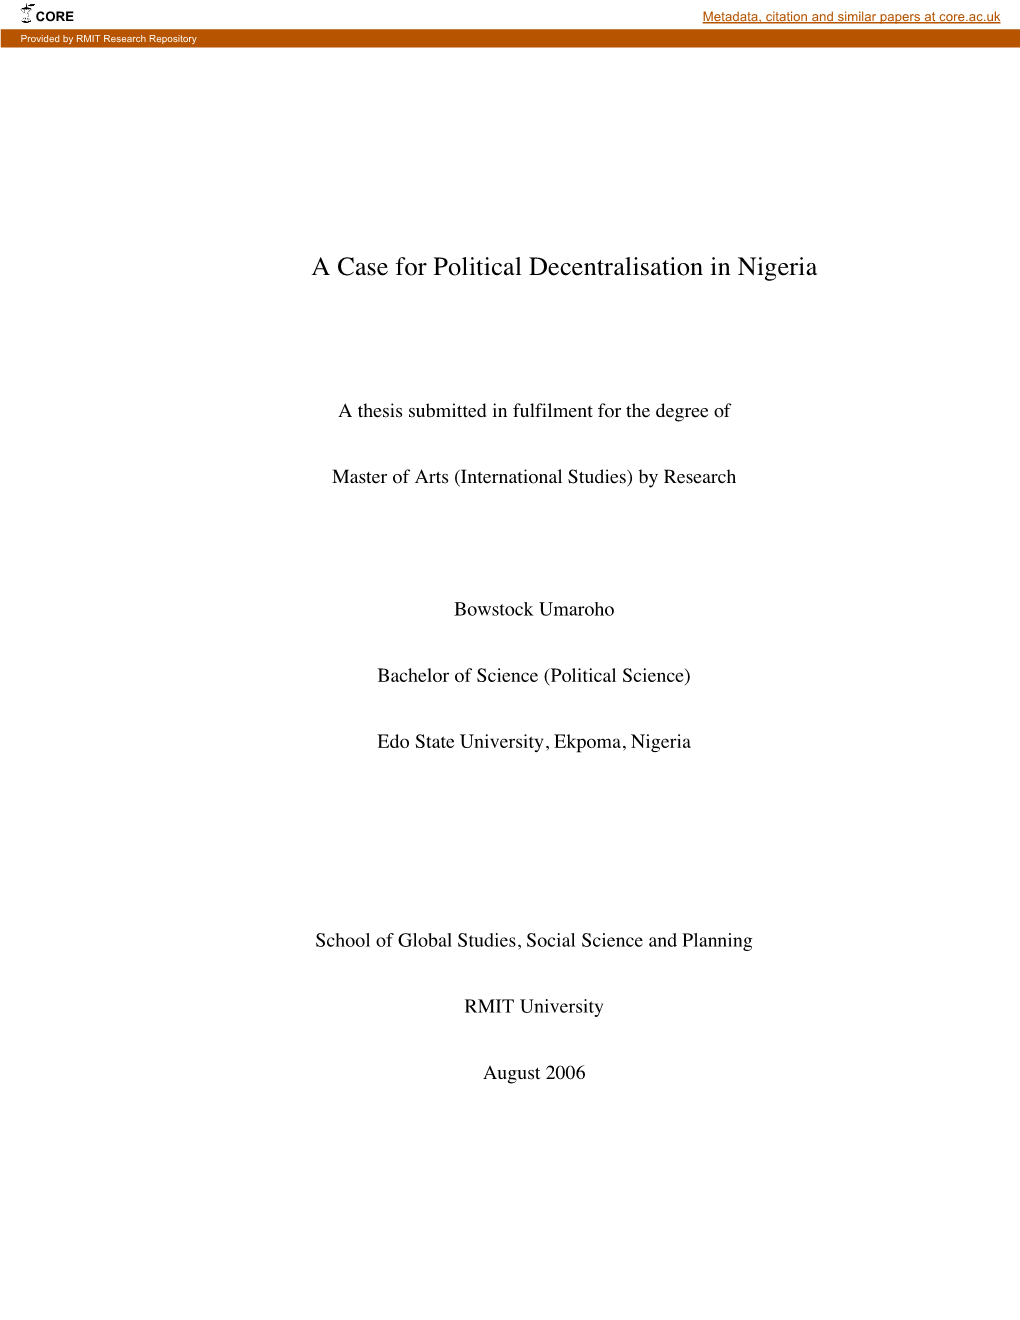 A Case for Political Decentralisation in Nigeria